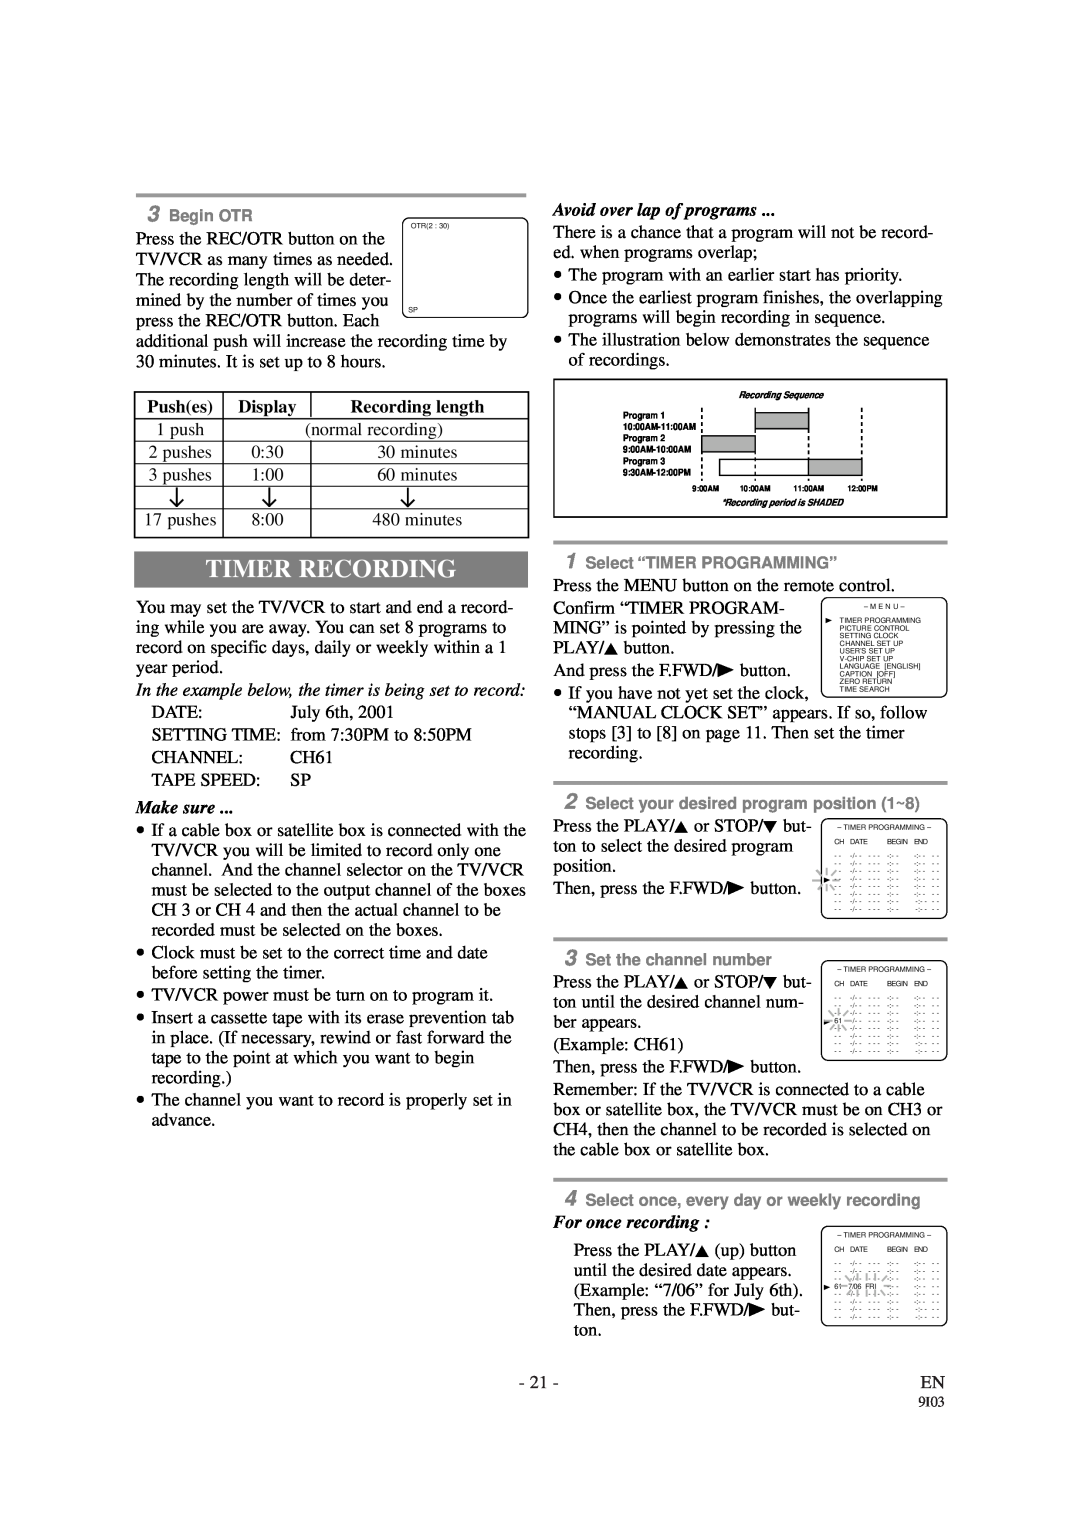 Symphonic WF-13C2 owner manual Timer Recording, Pushes, Display, Recording length 